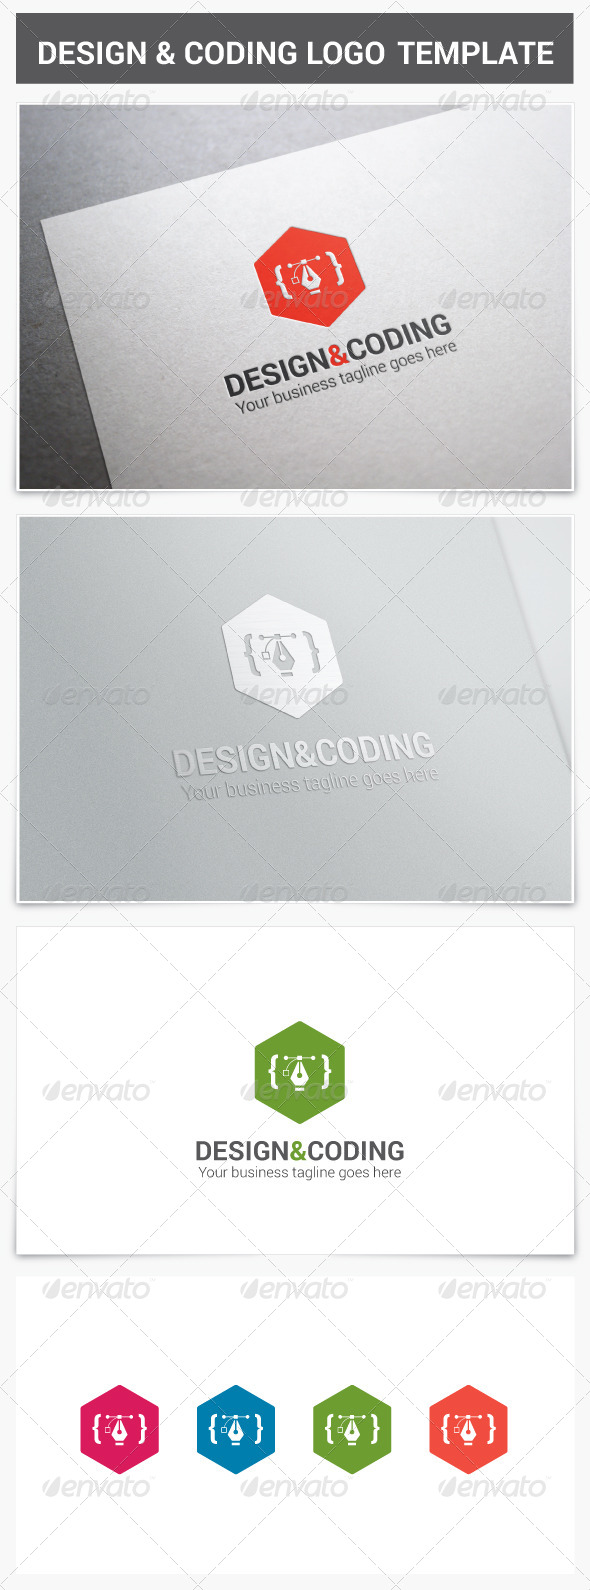 Design & Coding Logo